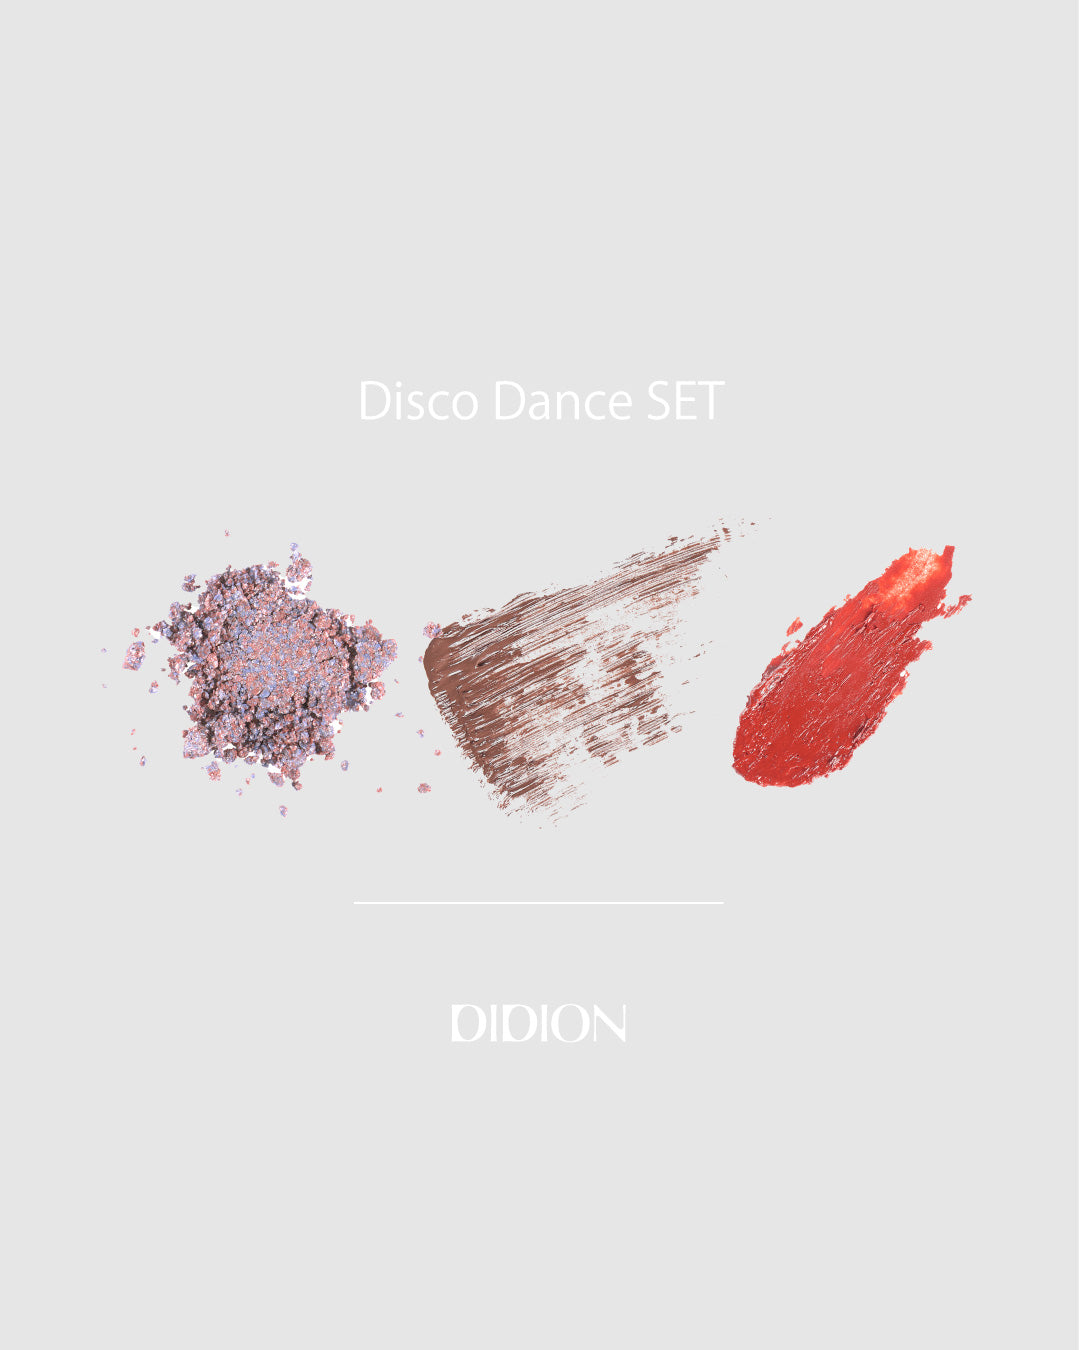 DIDION . “Disco Dance" SET